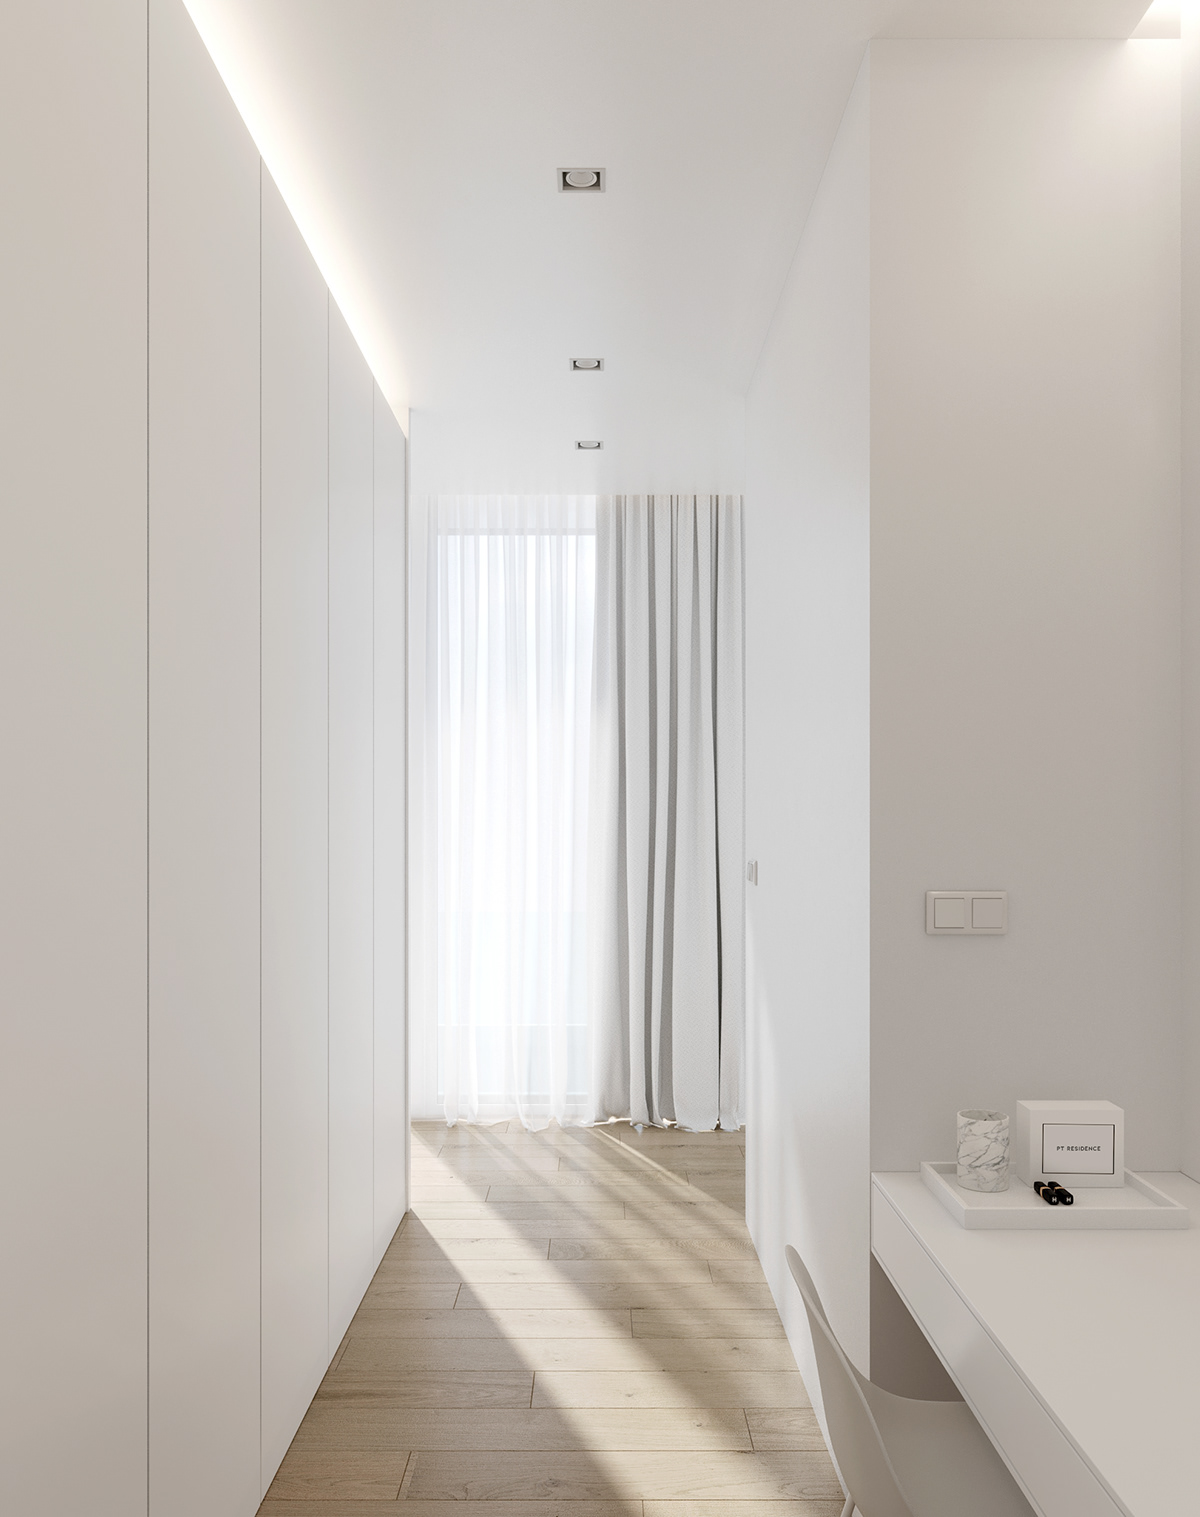 CGI Render corona coronarenderer bedroom design minimalist minimal interiordesign